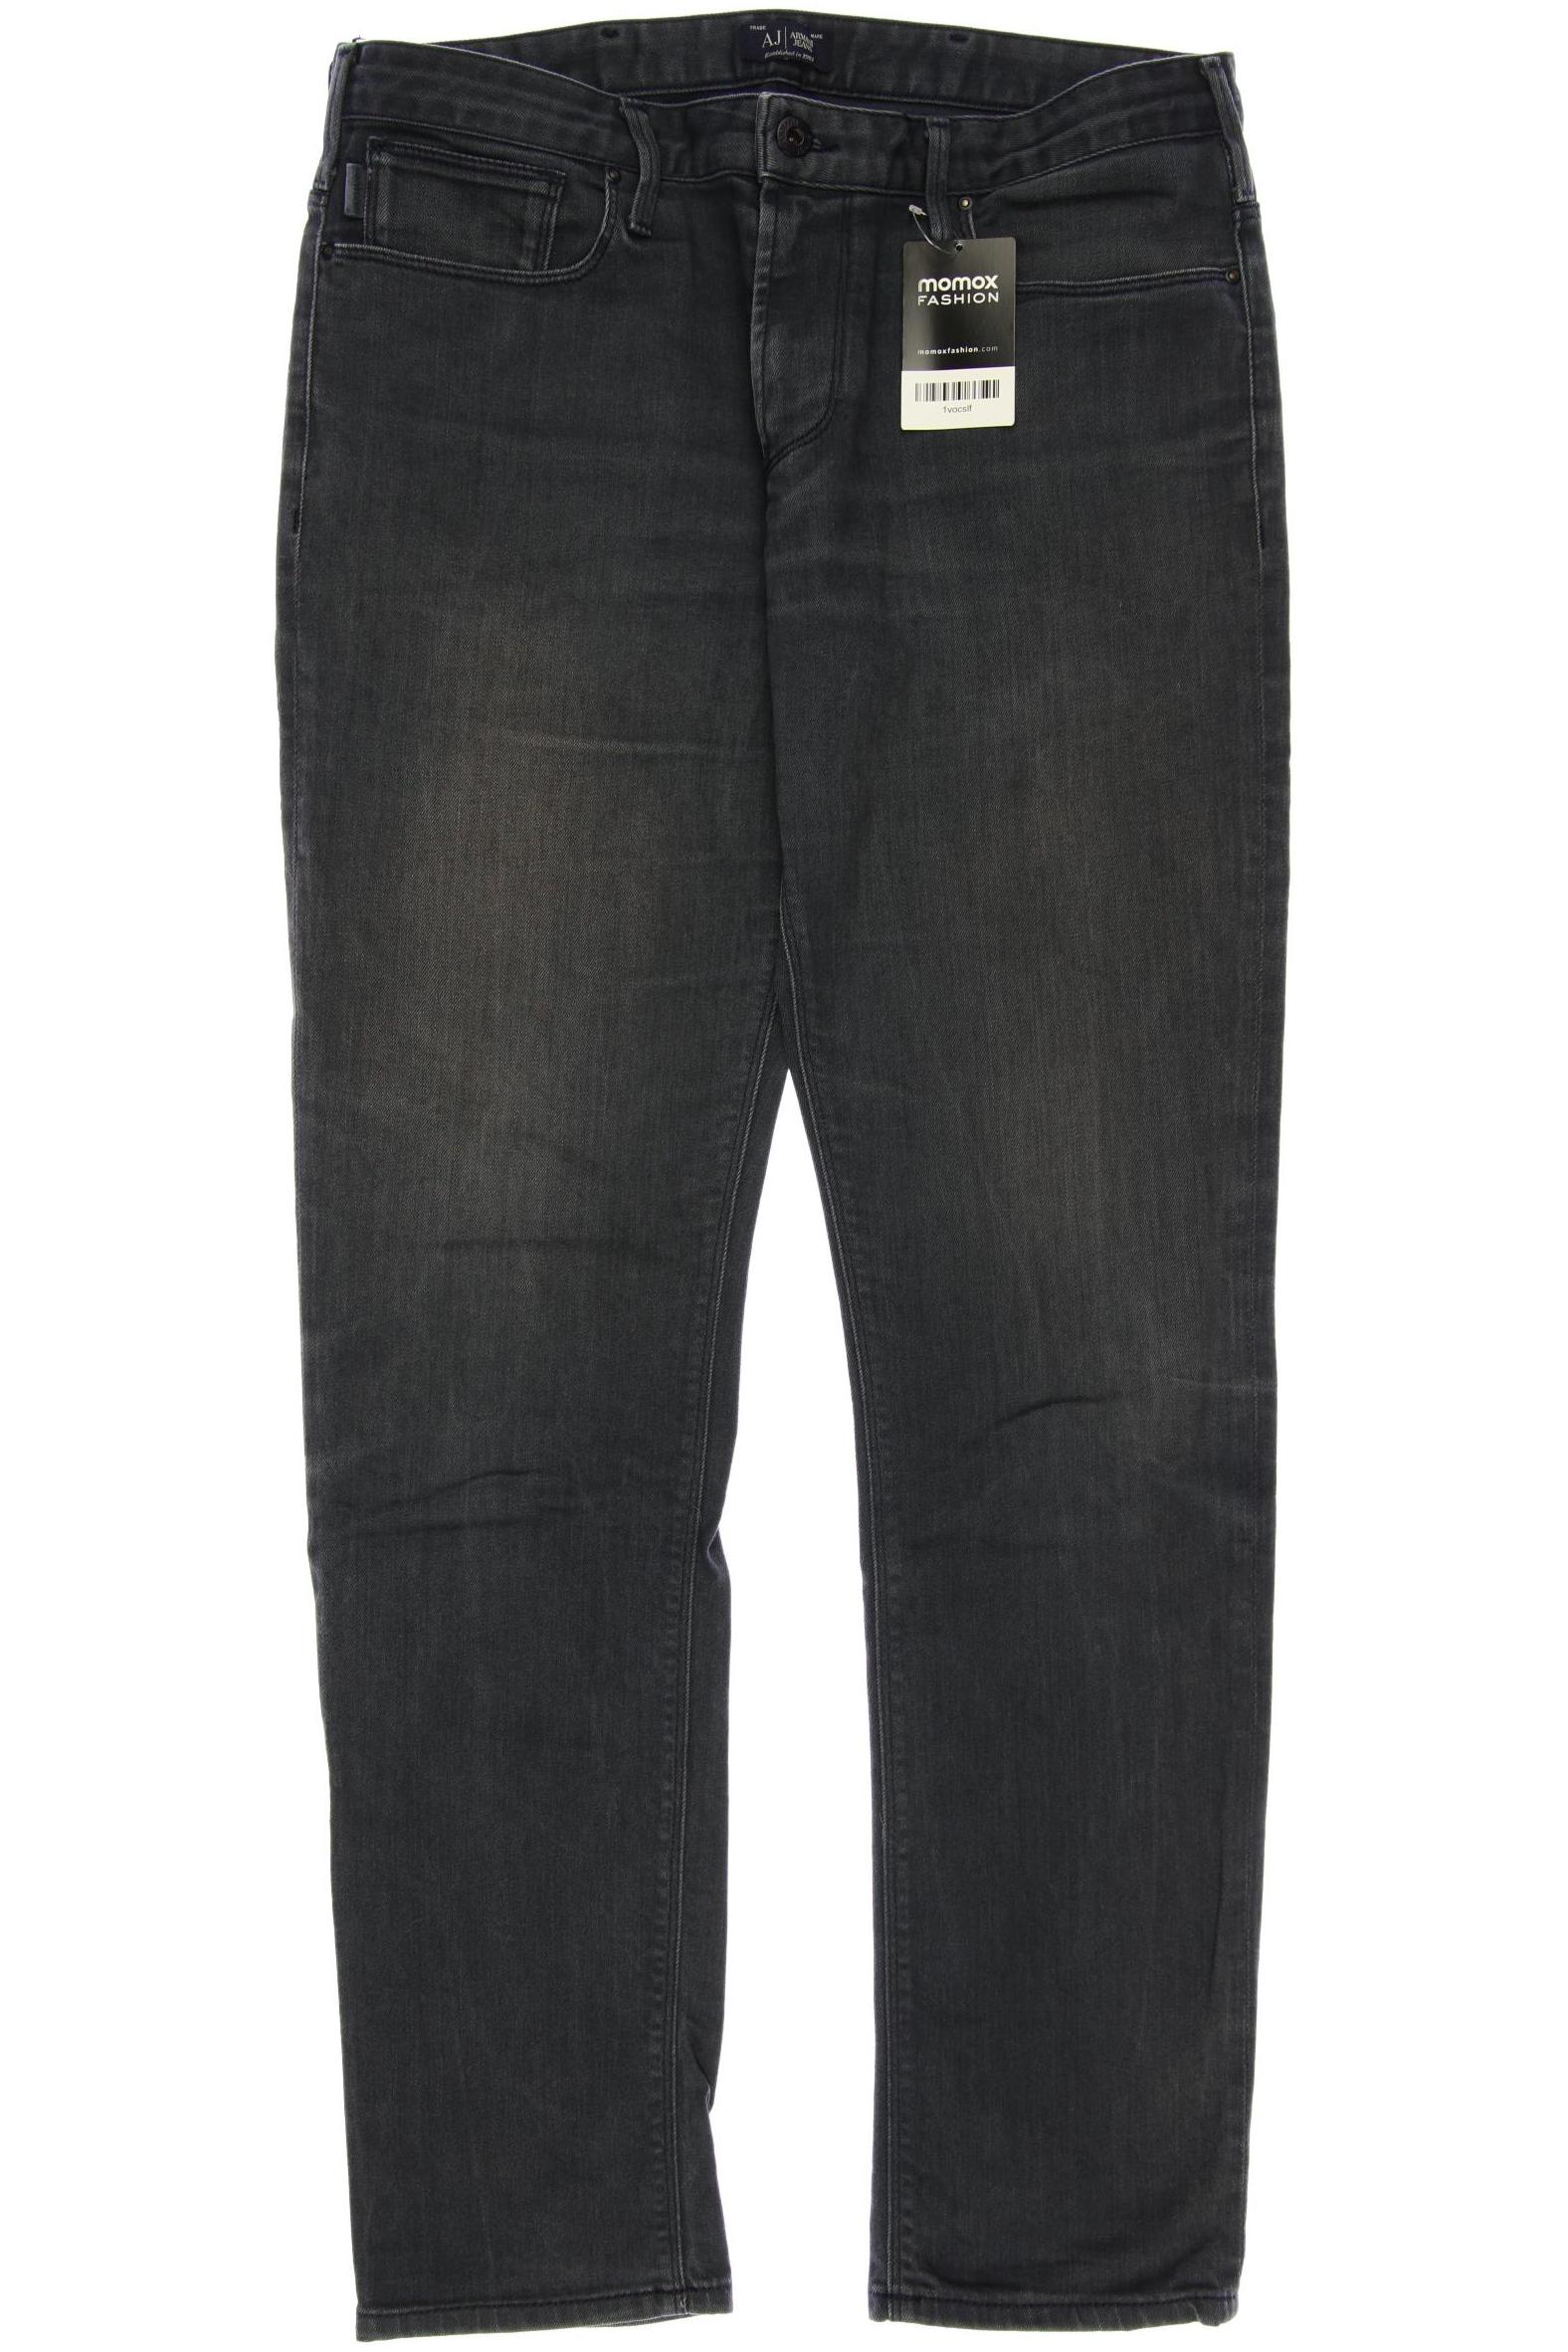 Armani Jeans Herren Jeans, marineblau von Armani Jeans